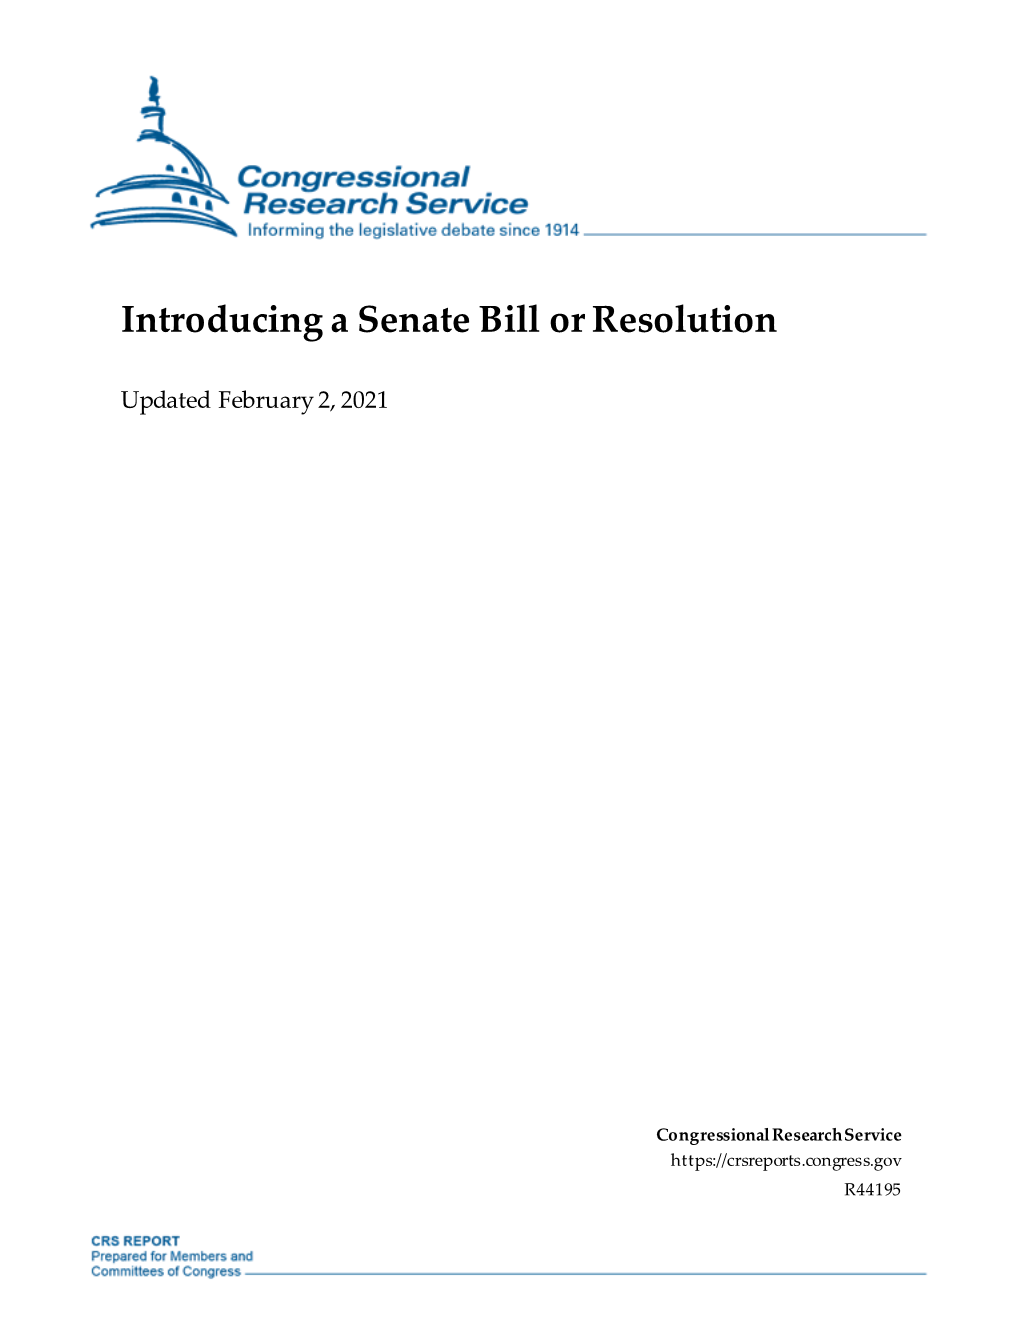 Introducing a Senate Bill Or Resolution